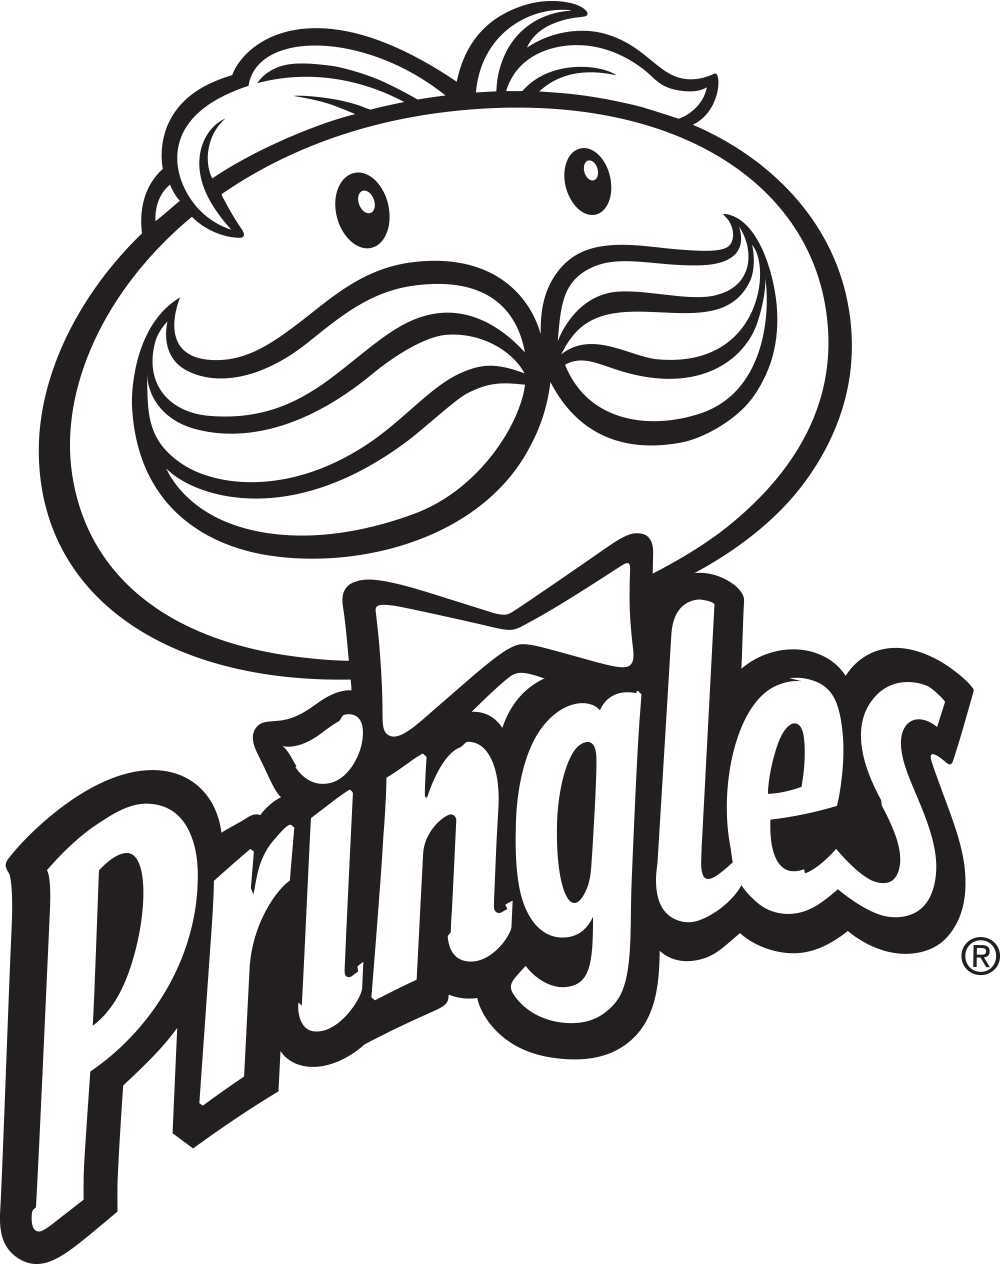 Download PNG image - Pringles Logo Transparent PNG 